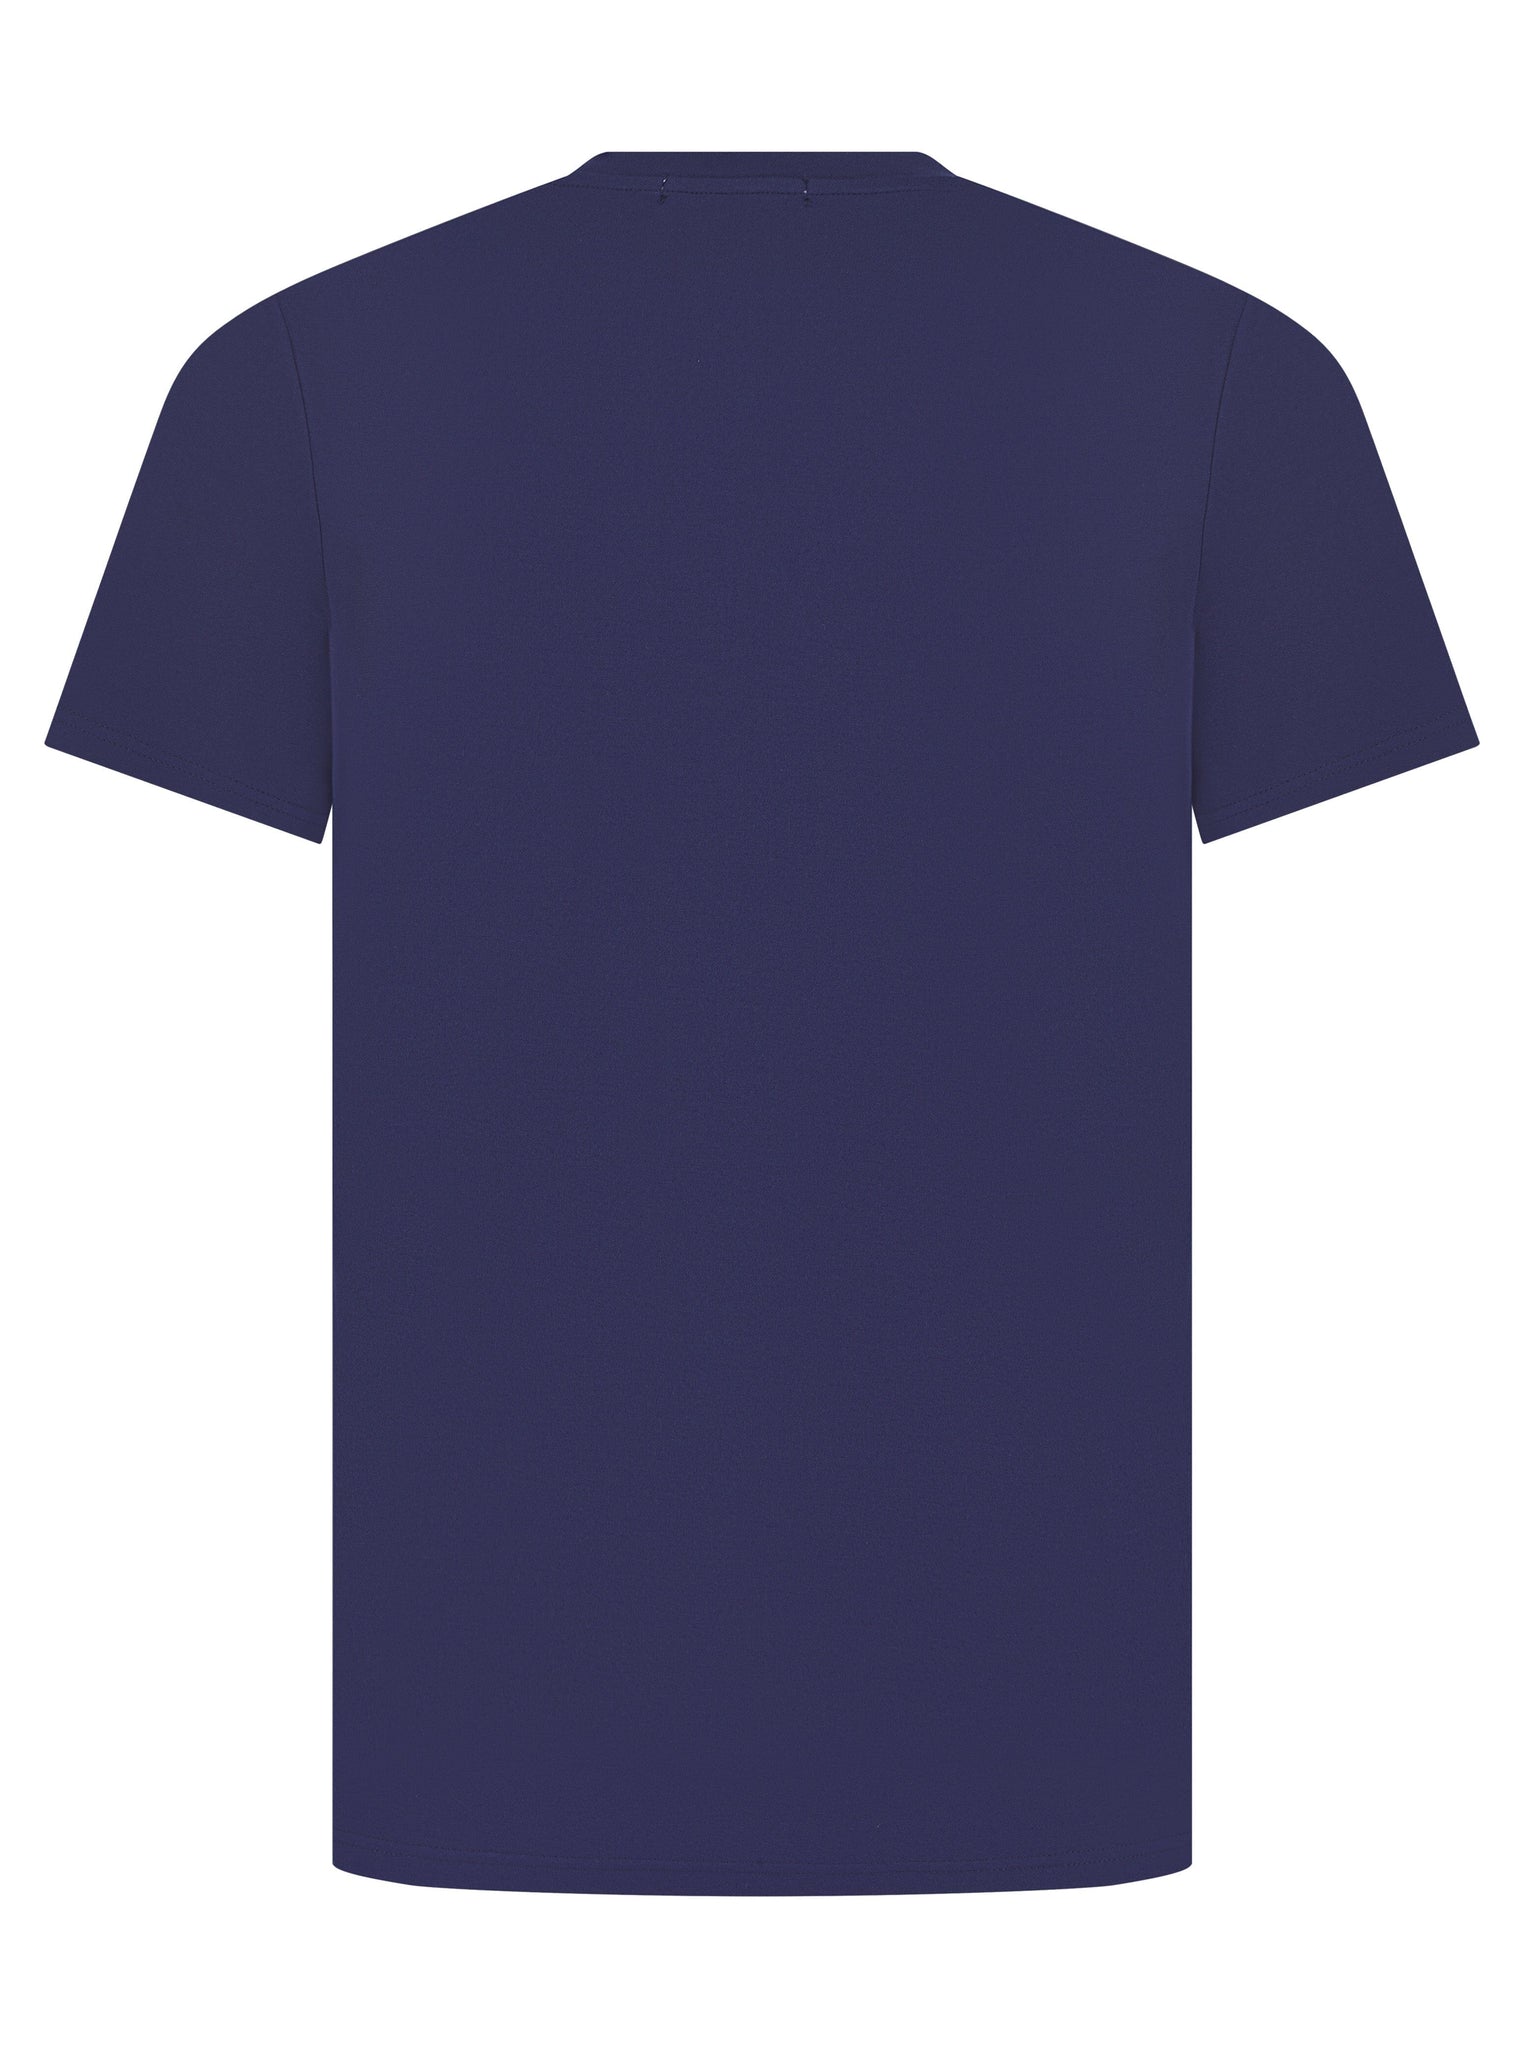 Tech Pocket T-shirt Navy/Navy